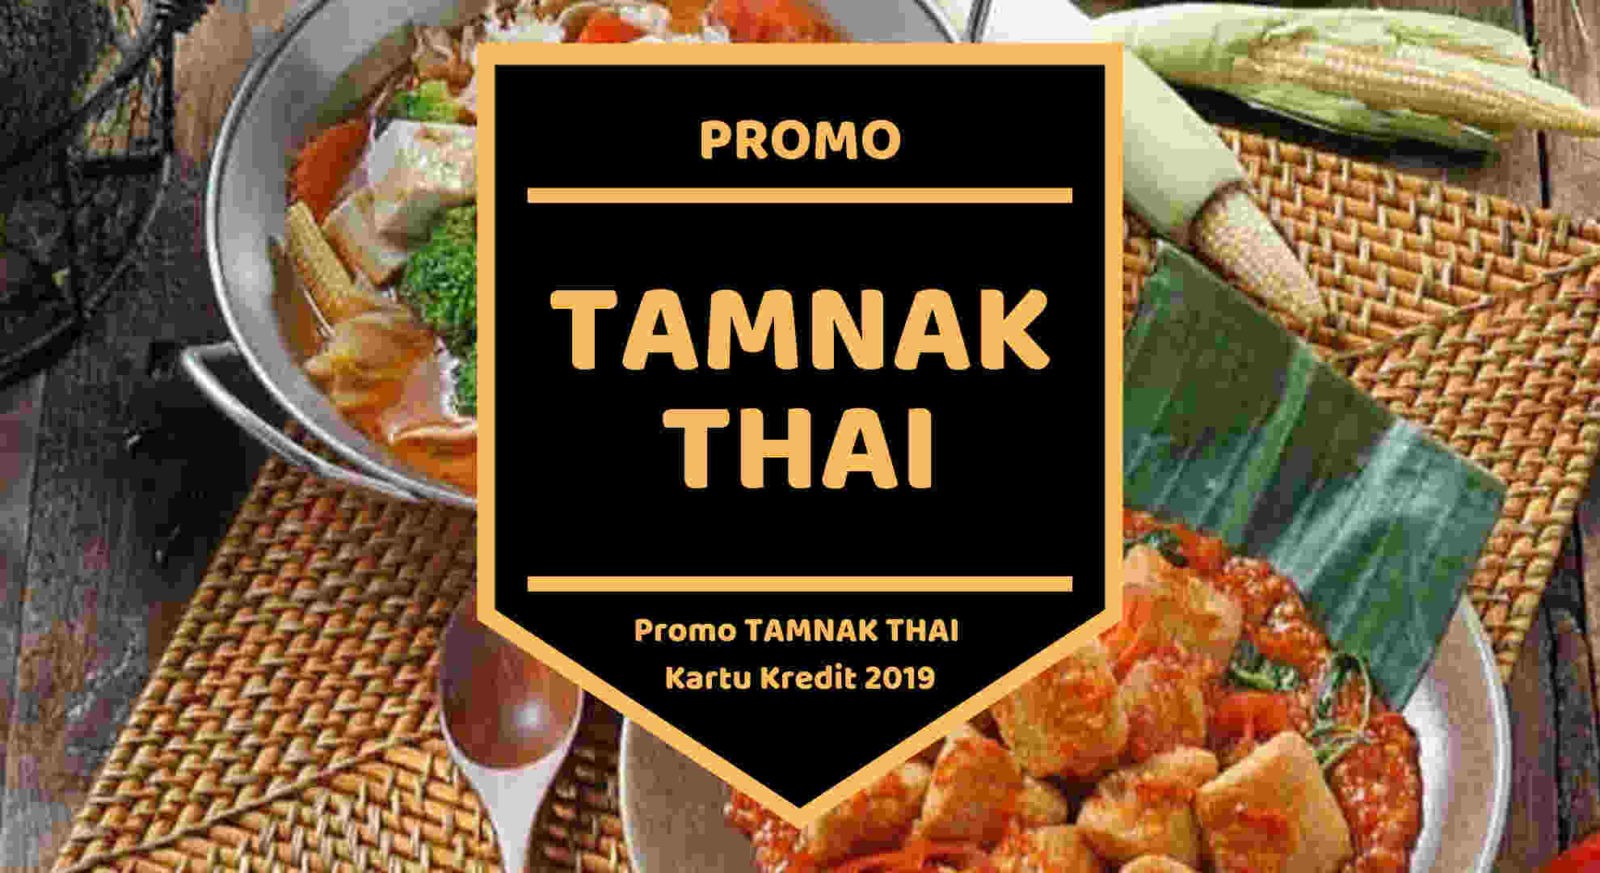 Promo Tamnak Thai